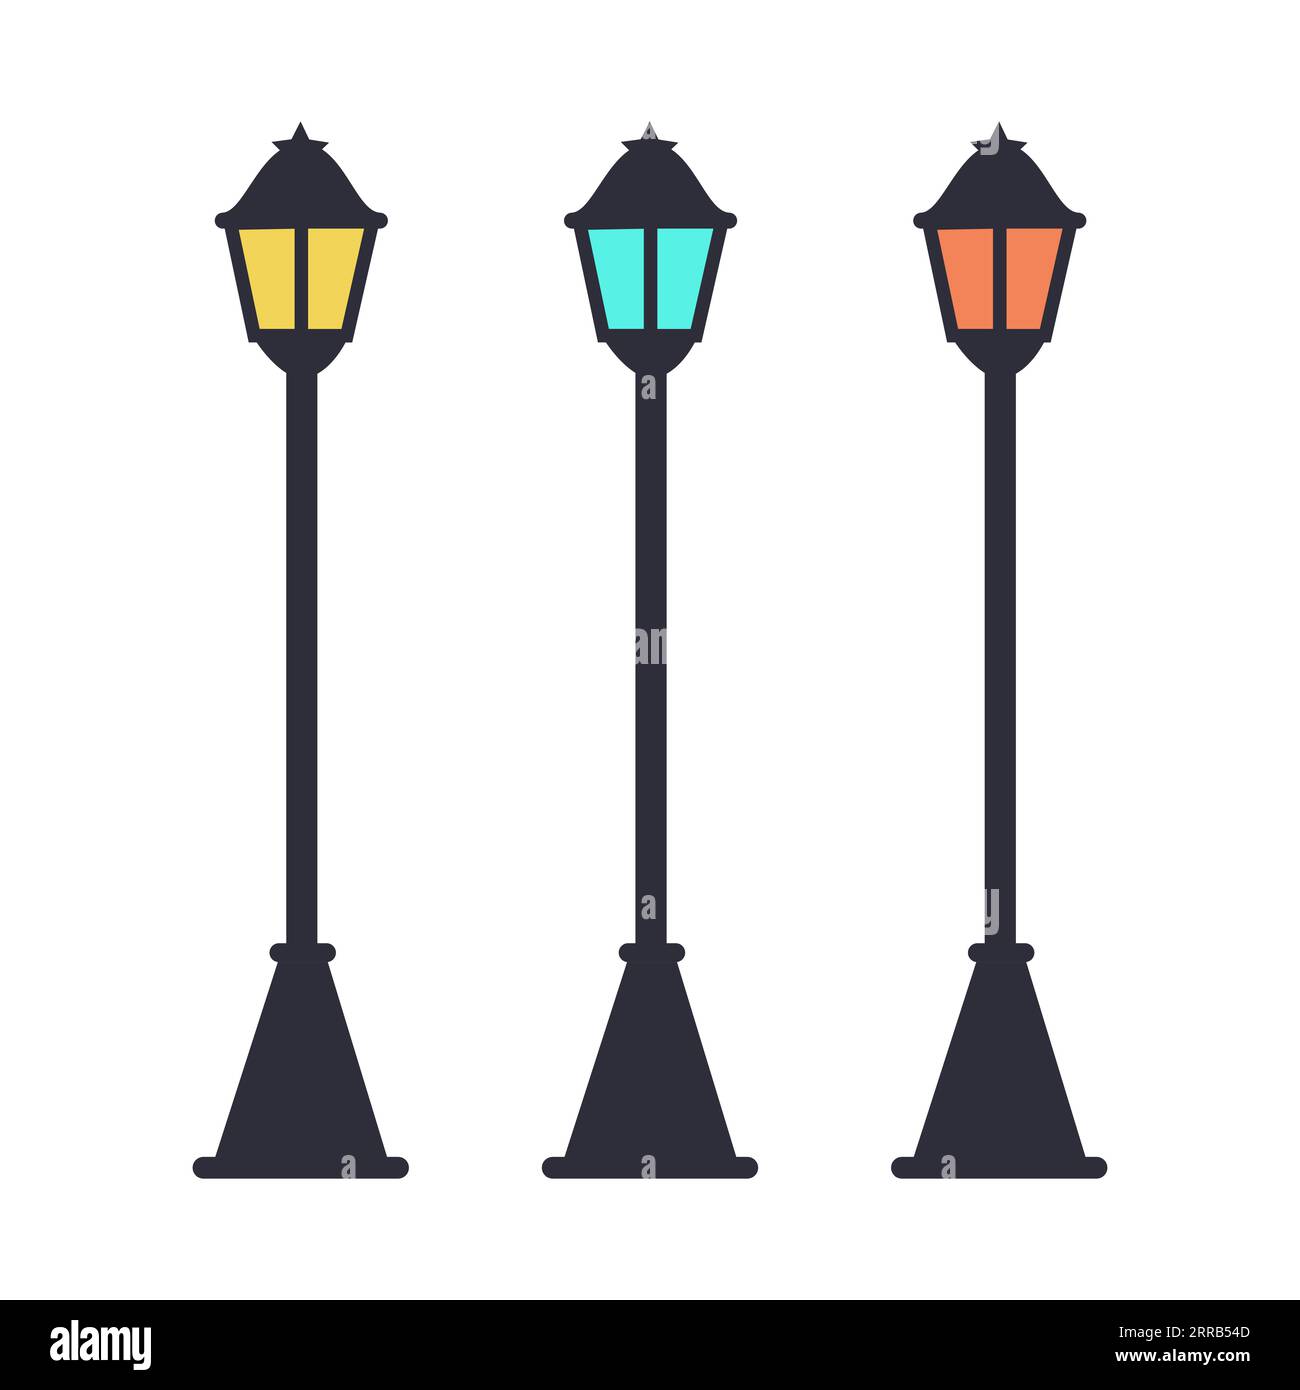 Retro-Vintage-Straßenlaternen, Straßenlaternen und Lampenpfosten flache Vektor-Illustration Stock Vektor